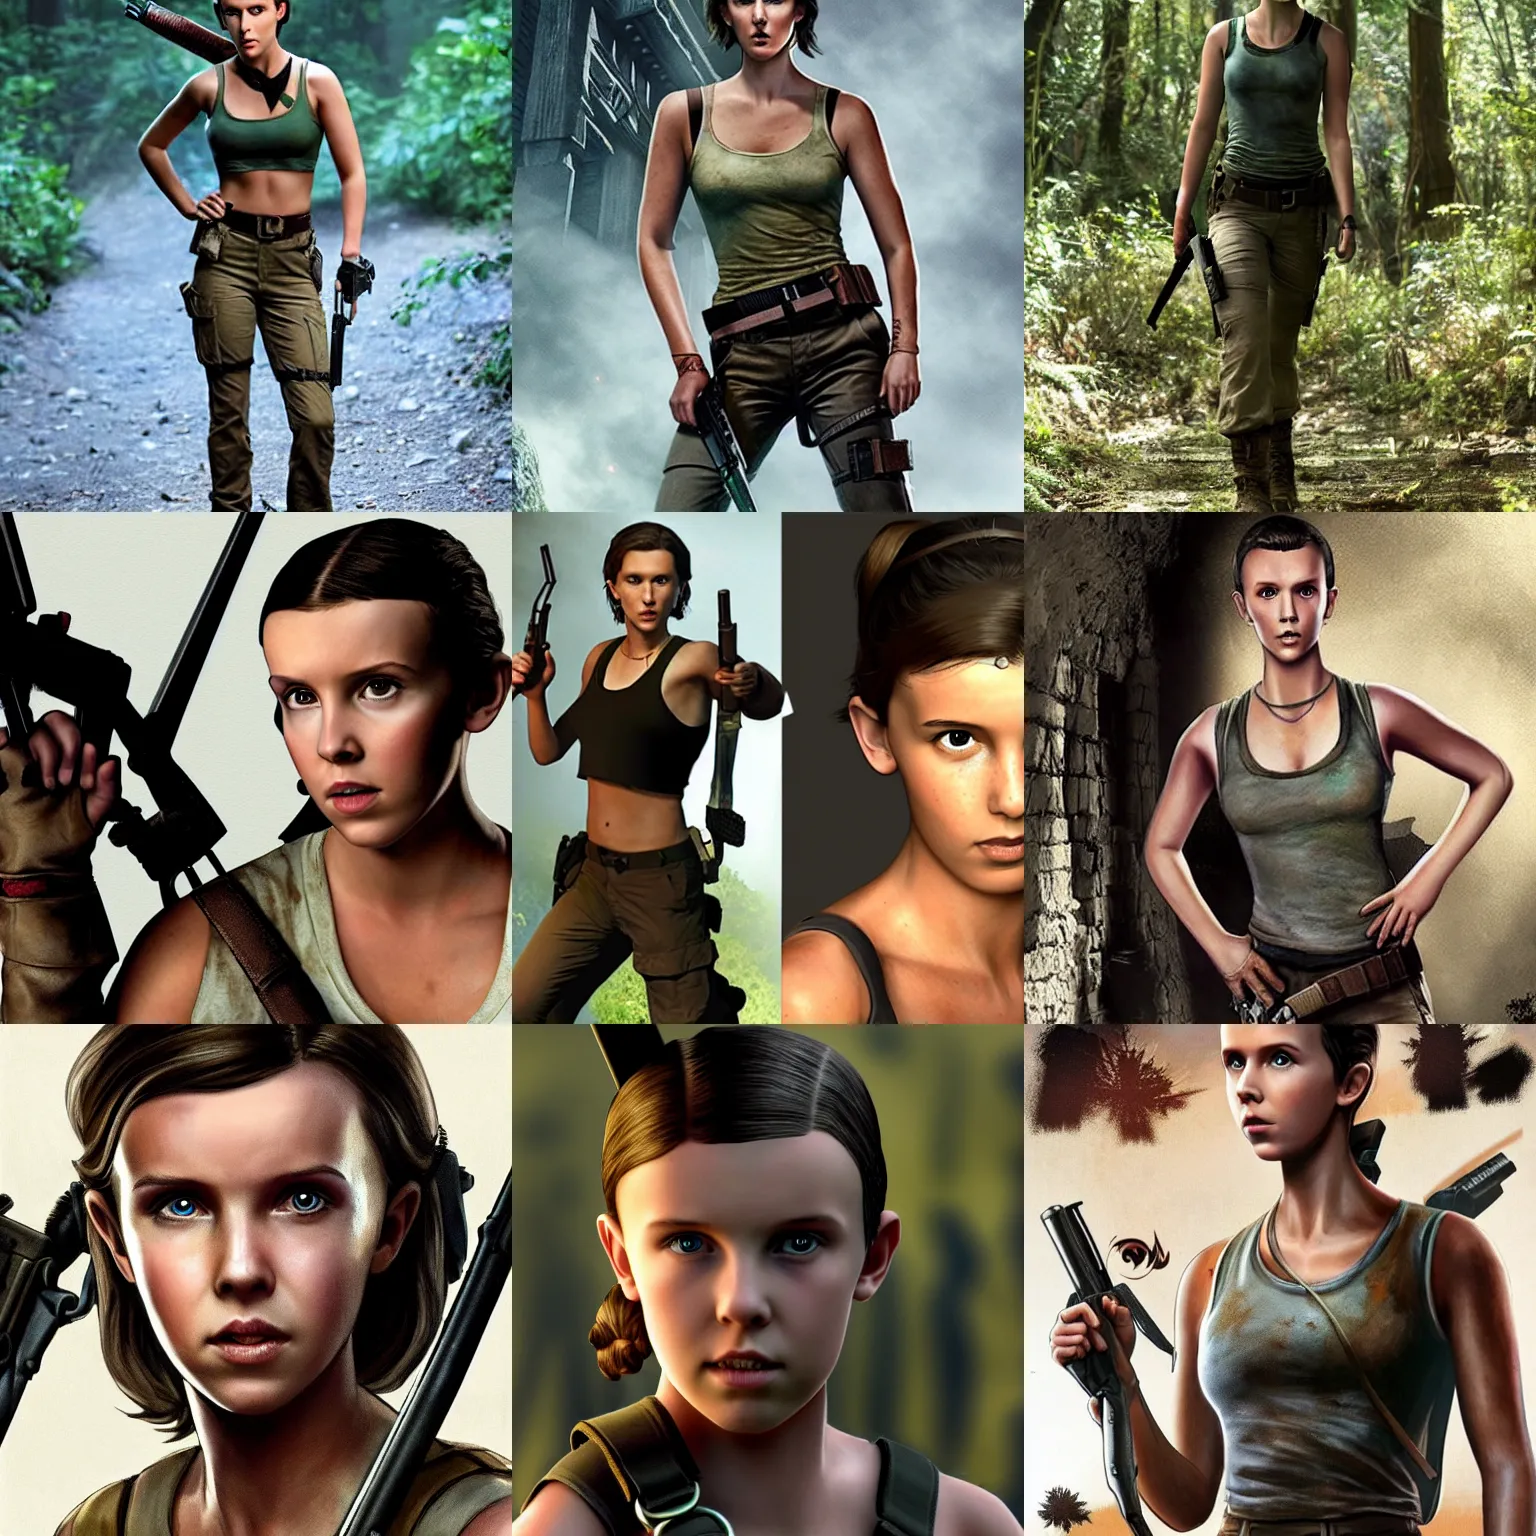 Prompt: Eleven/Millie Bobbie Brown as Lara Croft from Tomb Raider